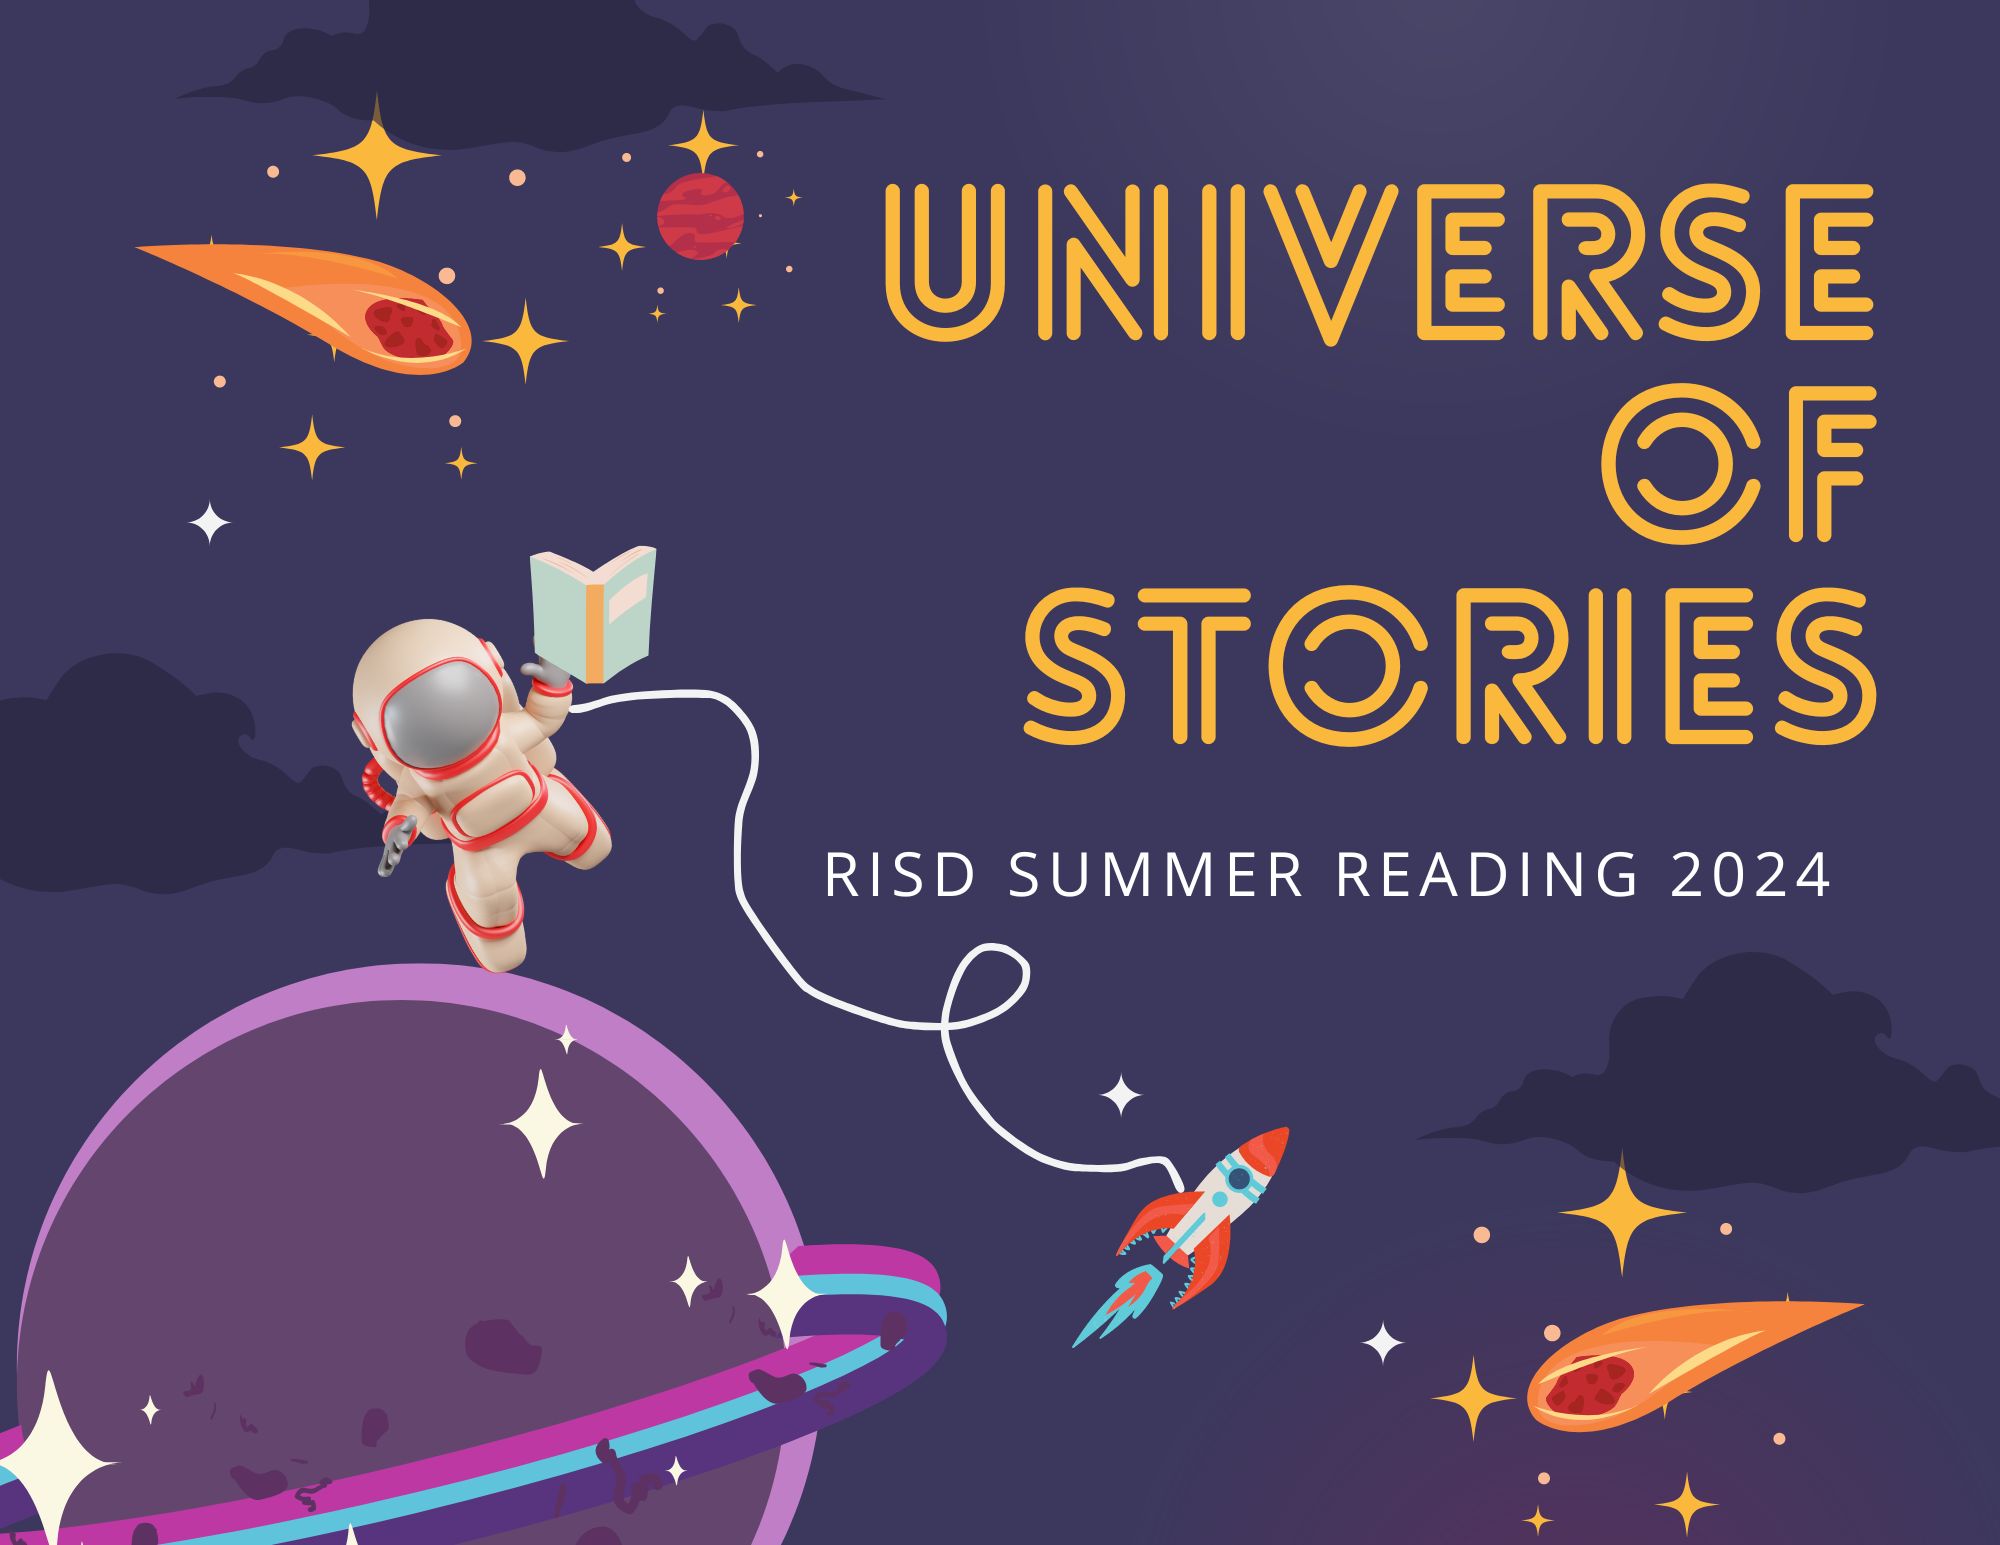 Universe of Stories
RISD Summer Reading 2024